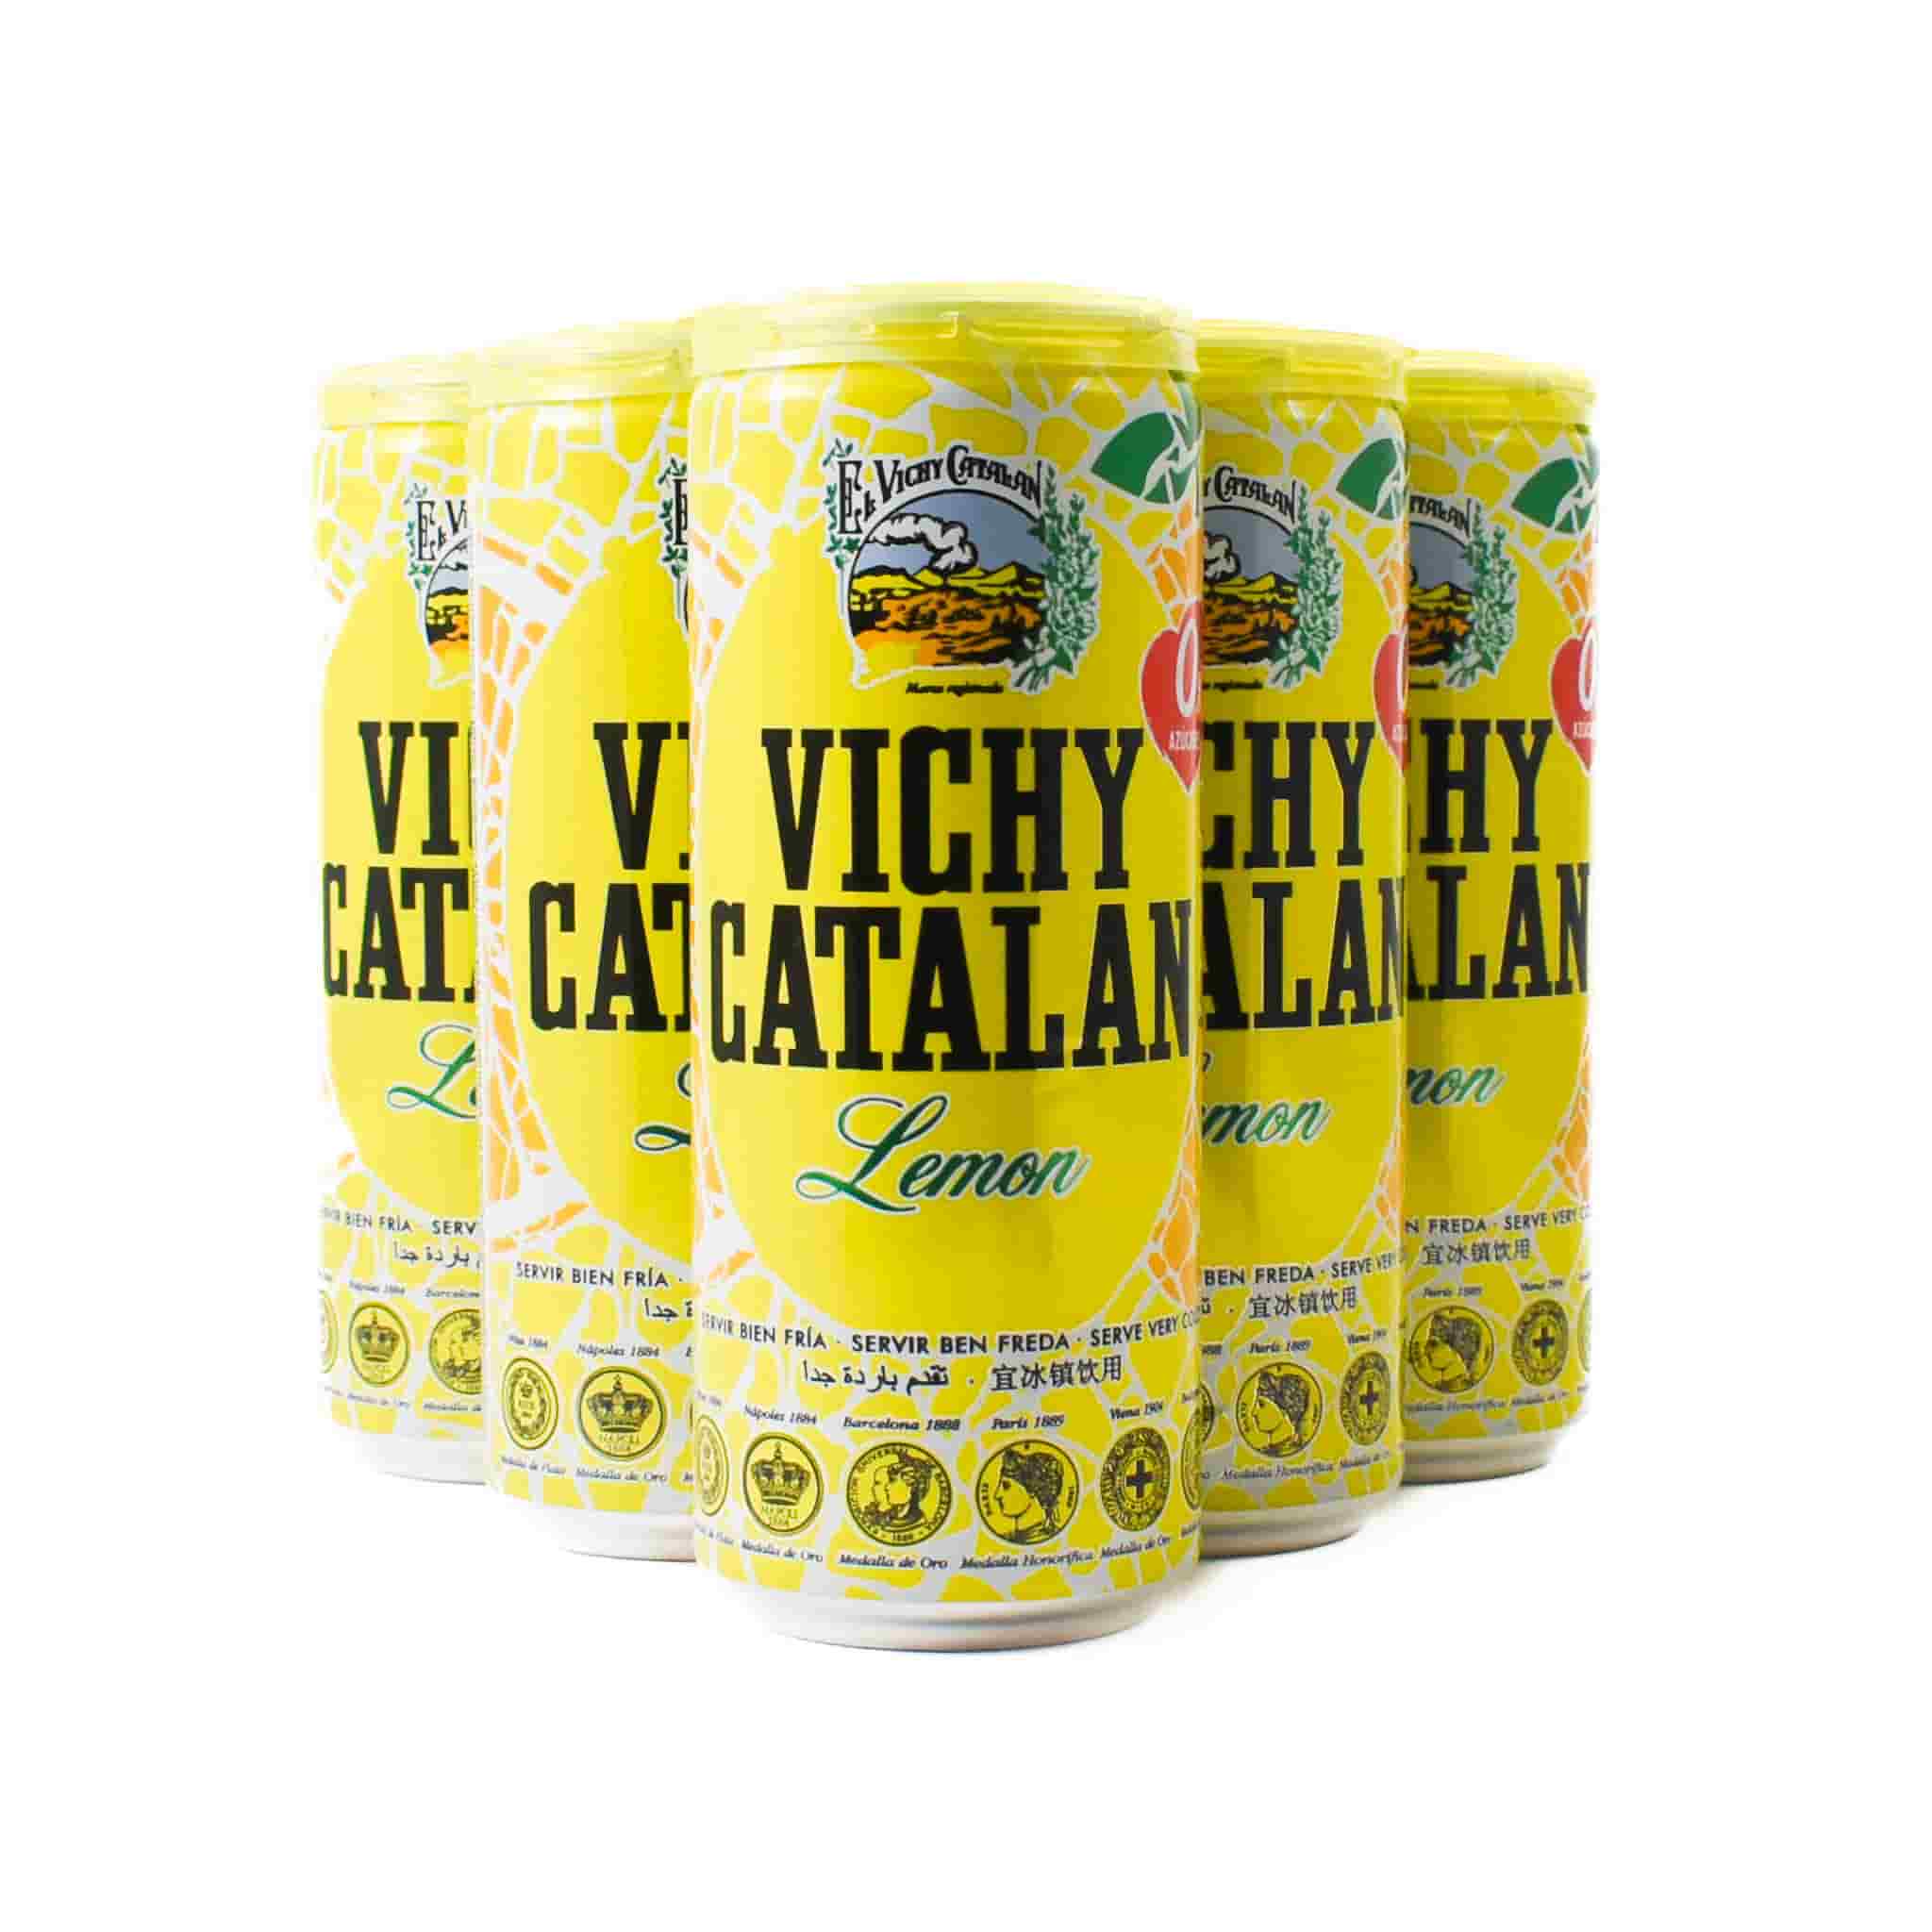 6x Vichy Catalan Sparkling Lemon Mineral Water, 330ml